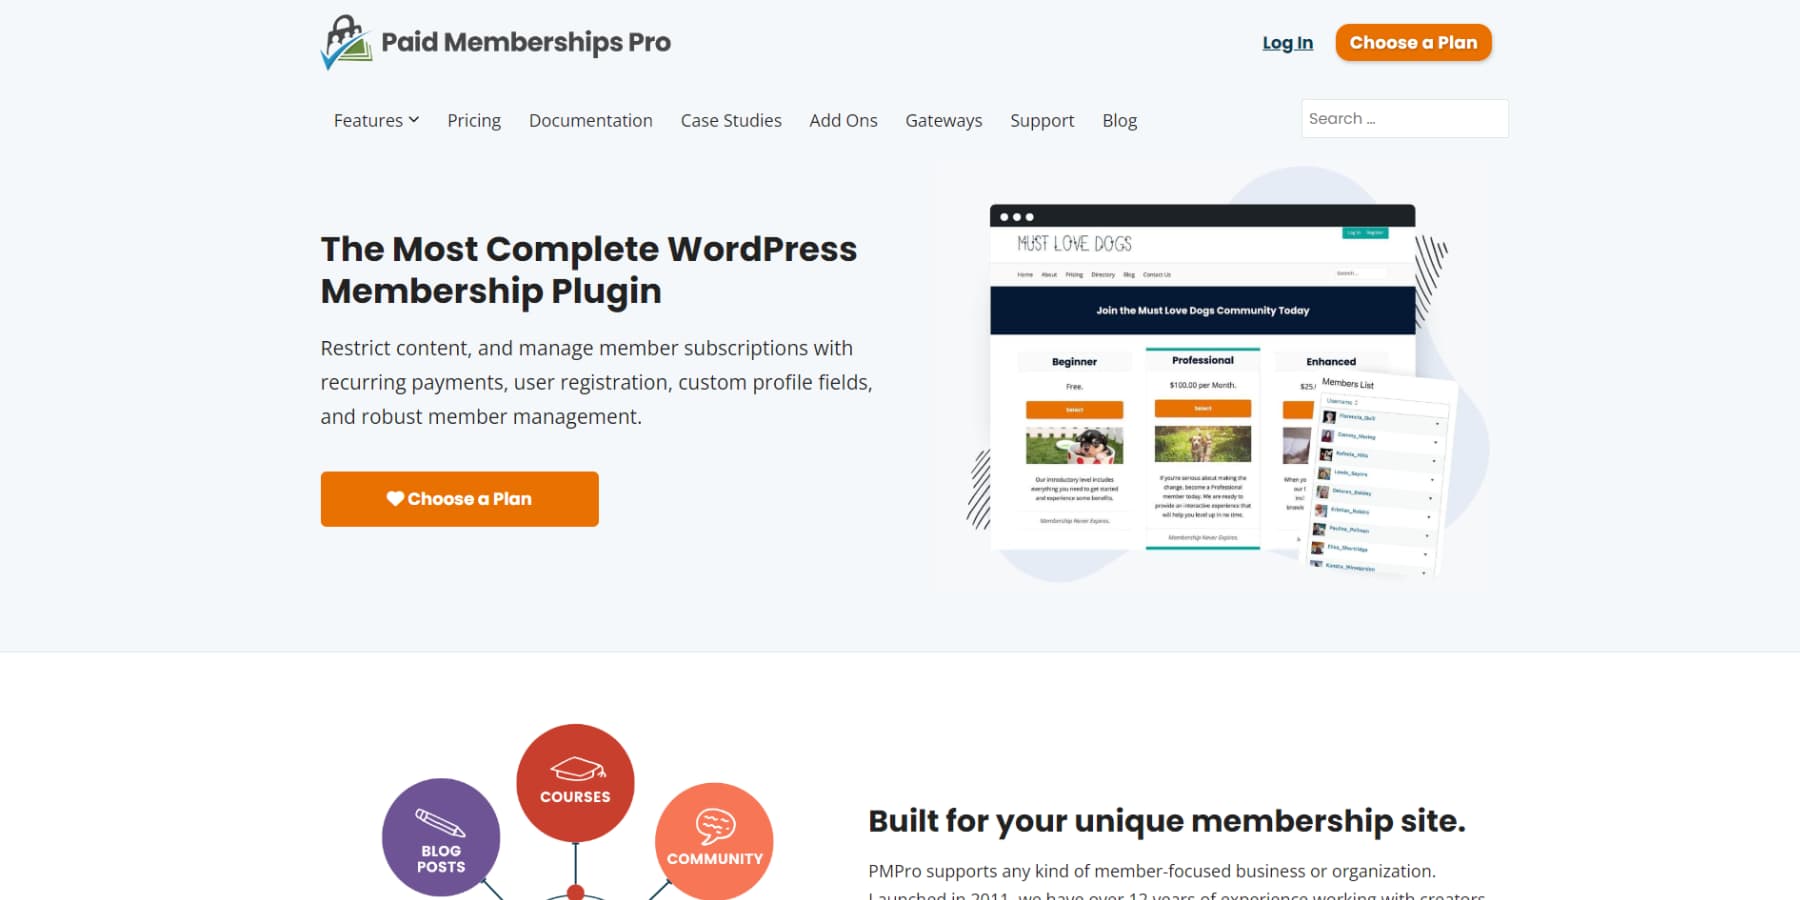 A screenshot of Paid Memberships Pro's homepage